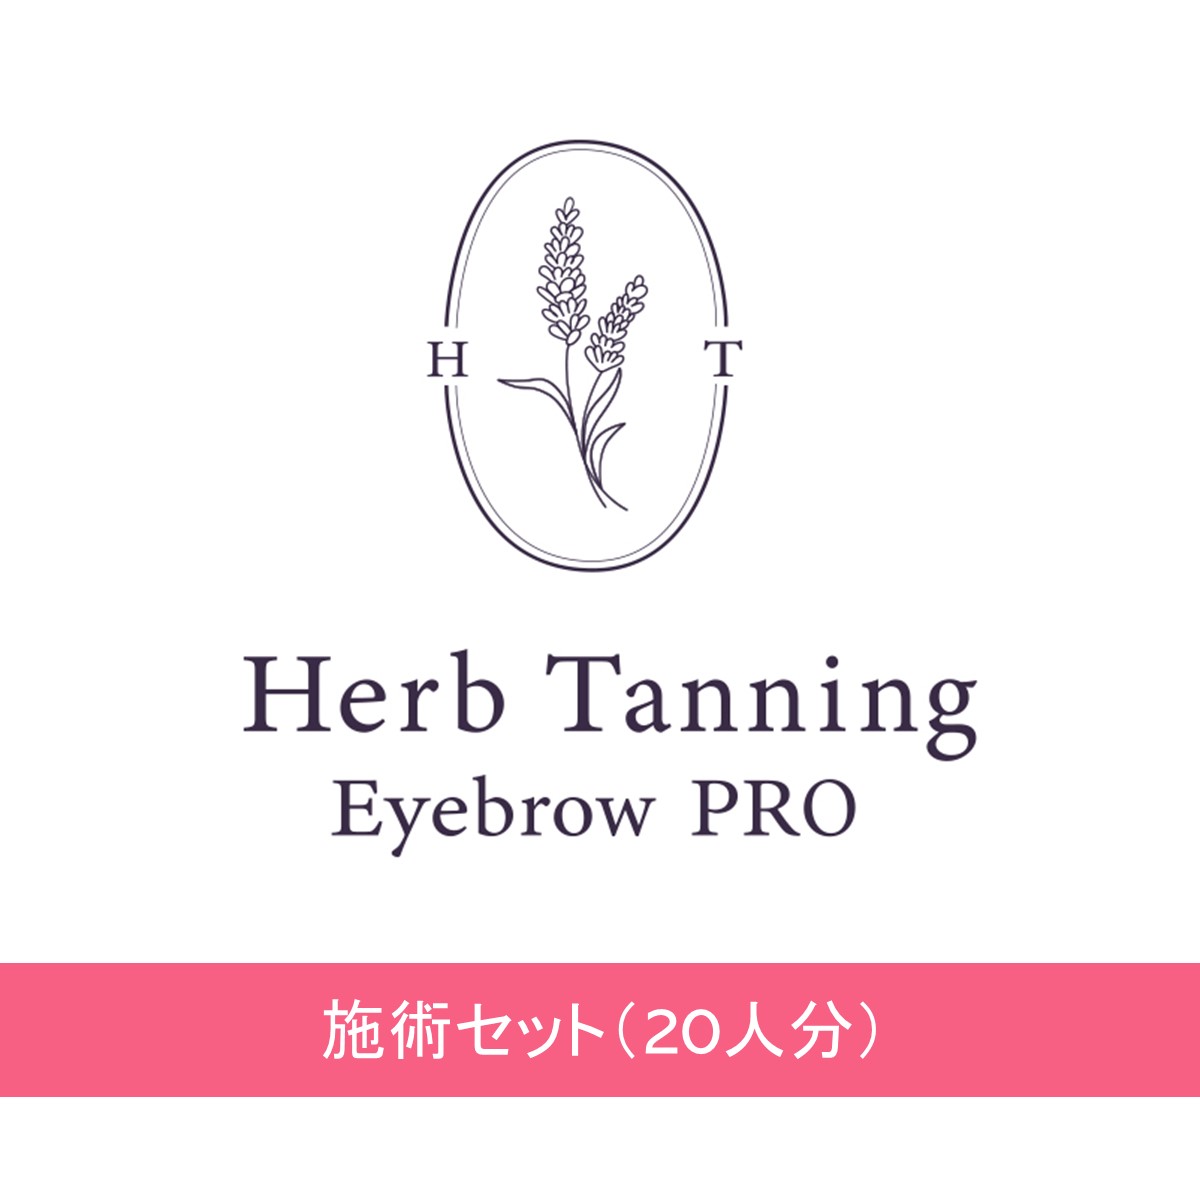 【Herb Tanning Eyebrow PRO】 ケース・備品付きセット 20人分（チェスナット・ビスタ各10人分）